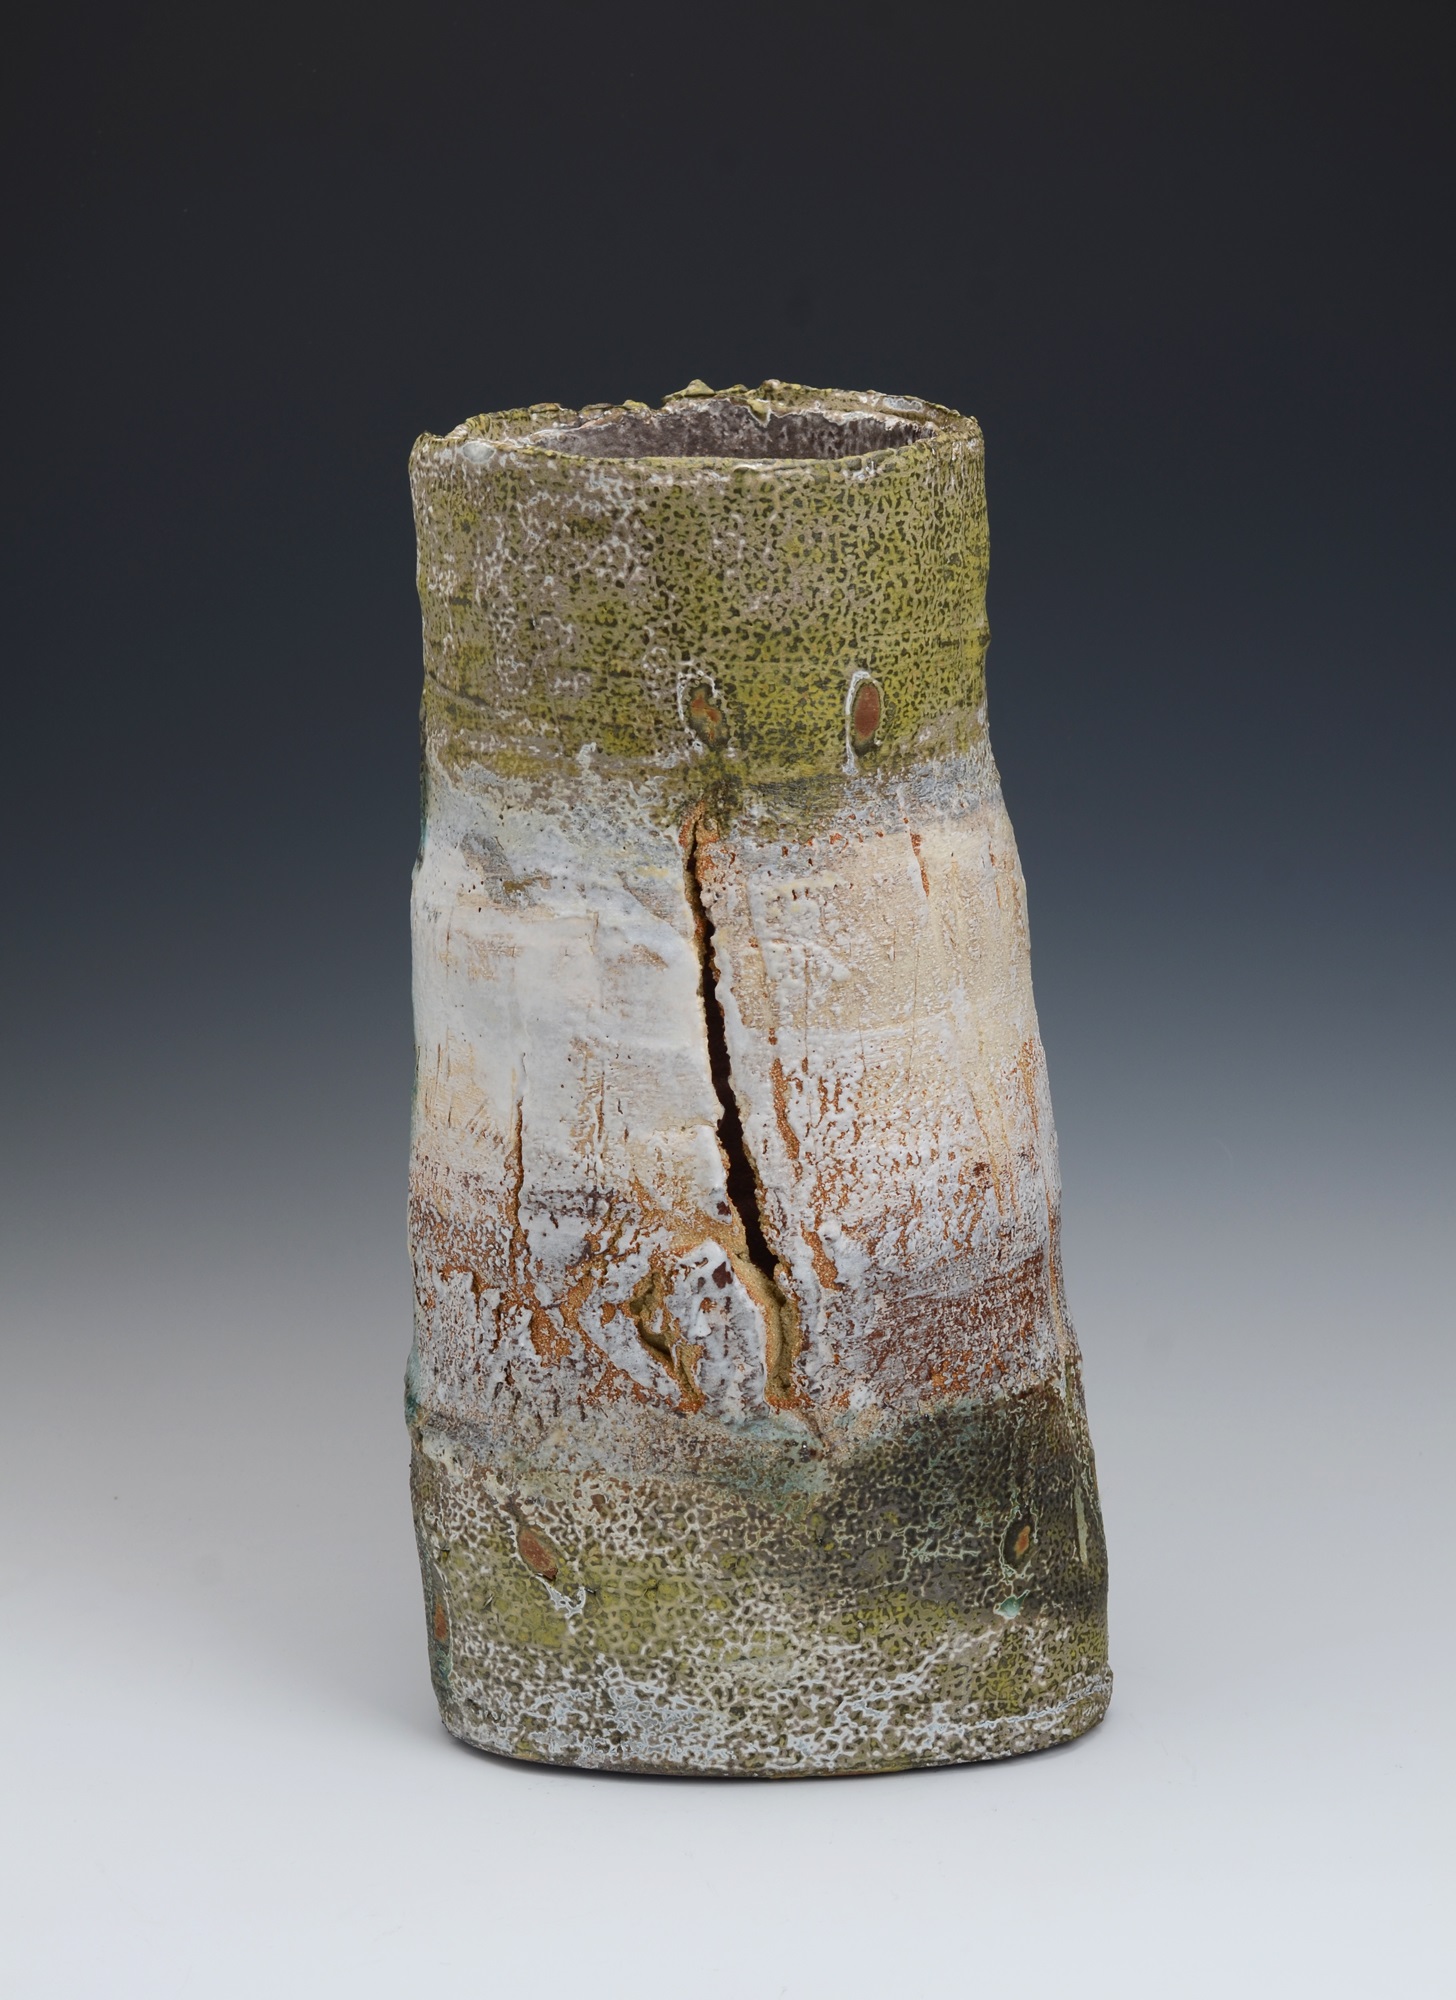 Rachel Wood, "Bark" Gefäß, 35 x 19 cm, Steinzeug